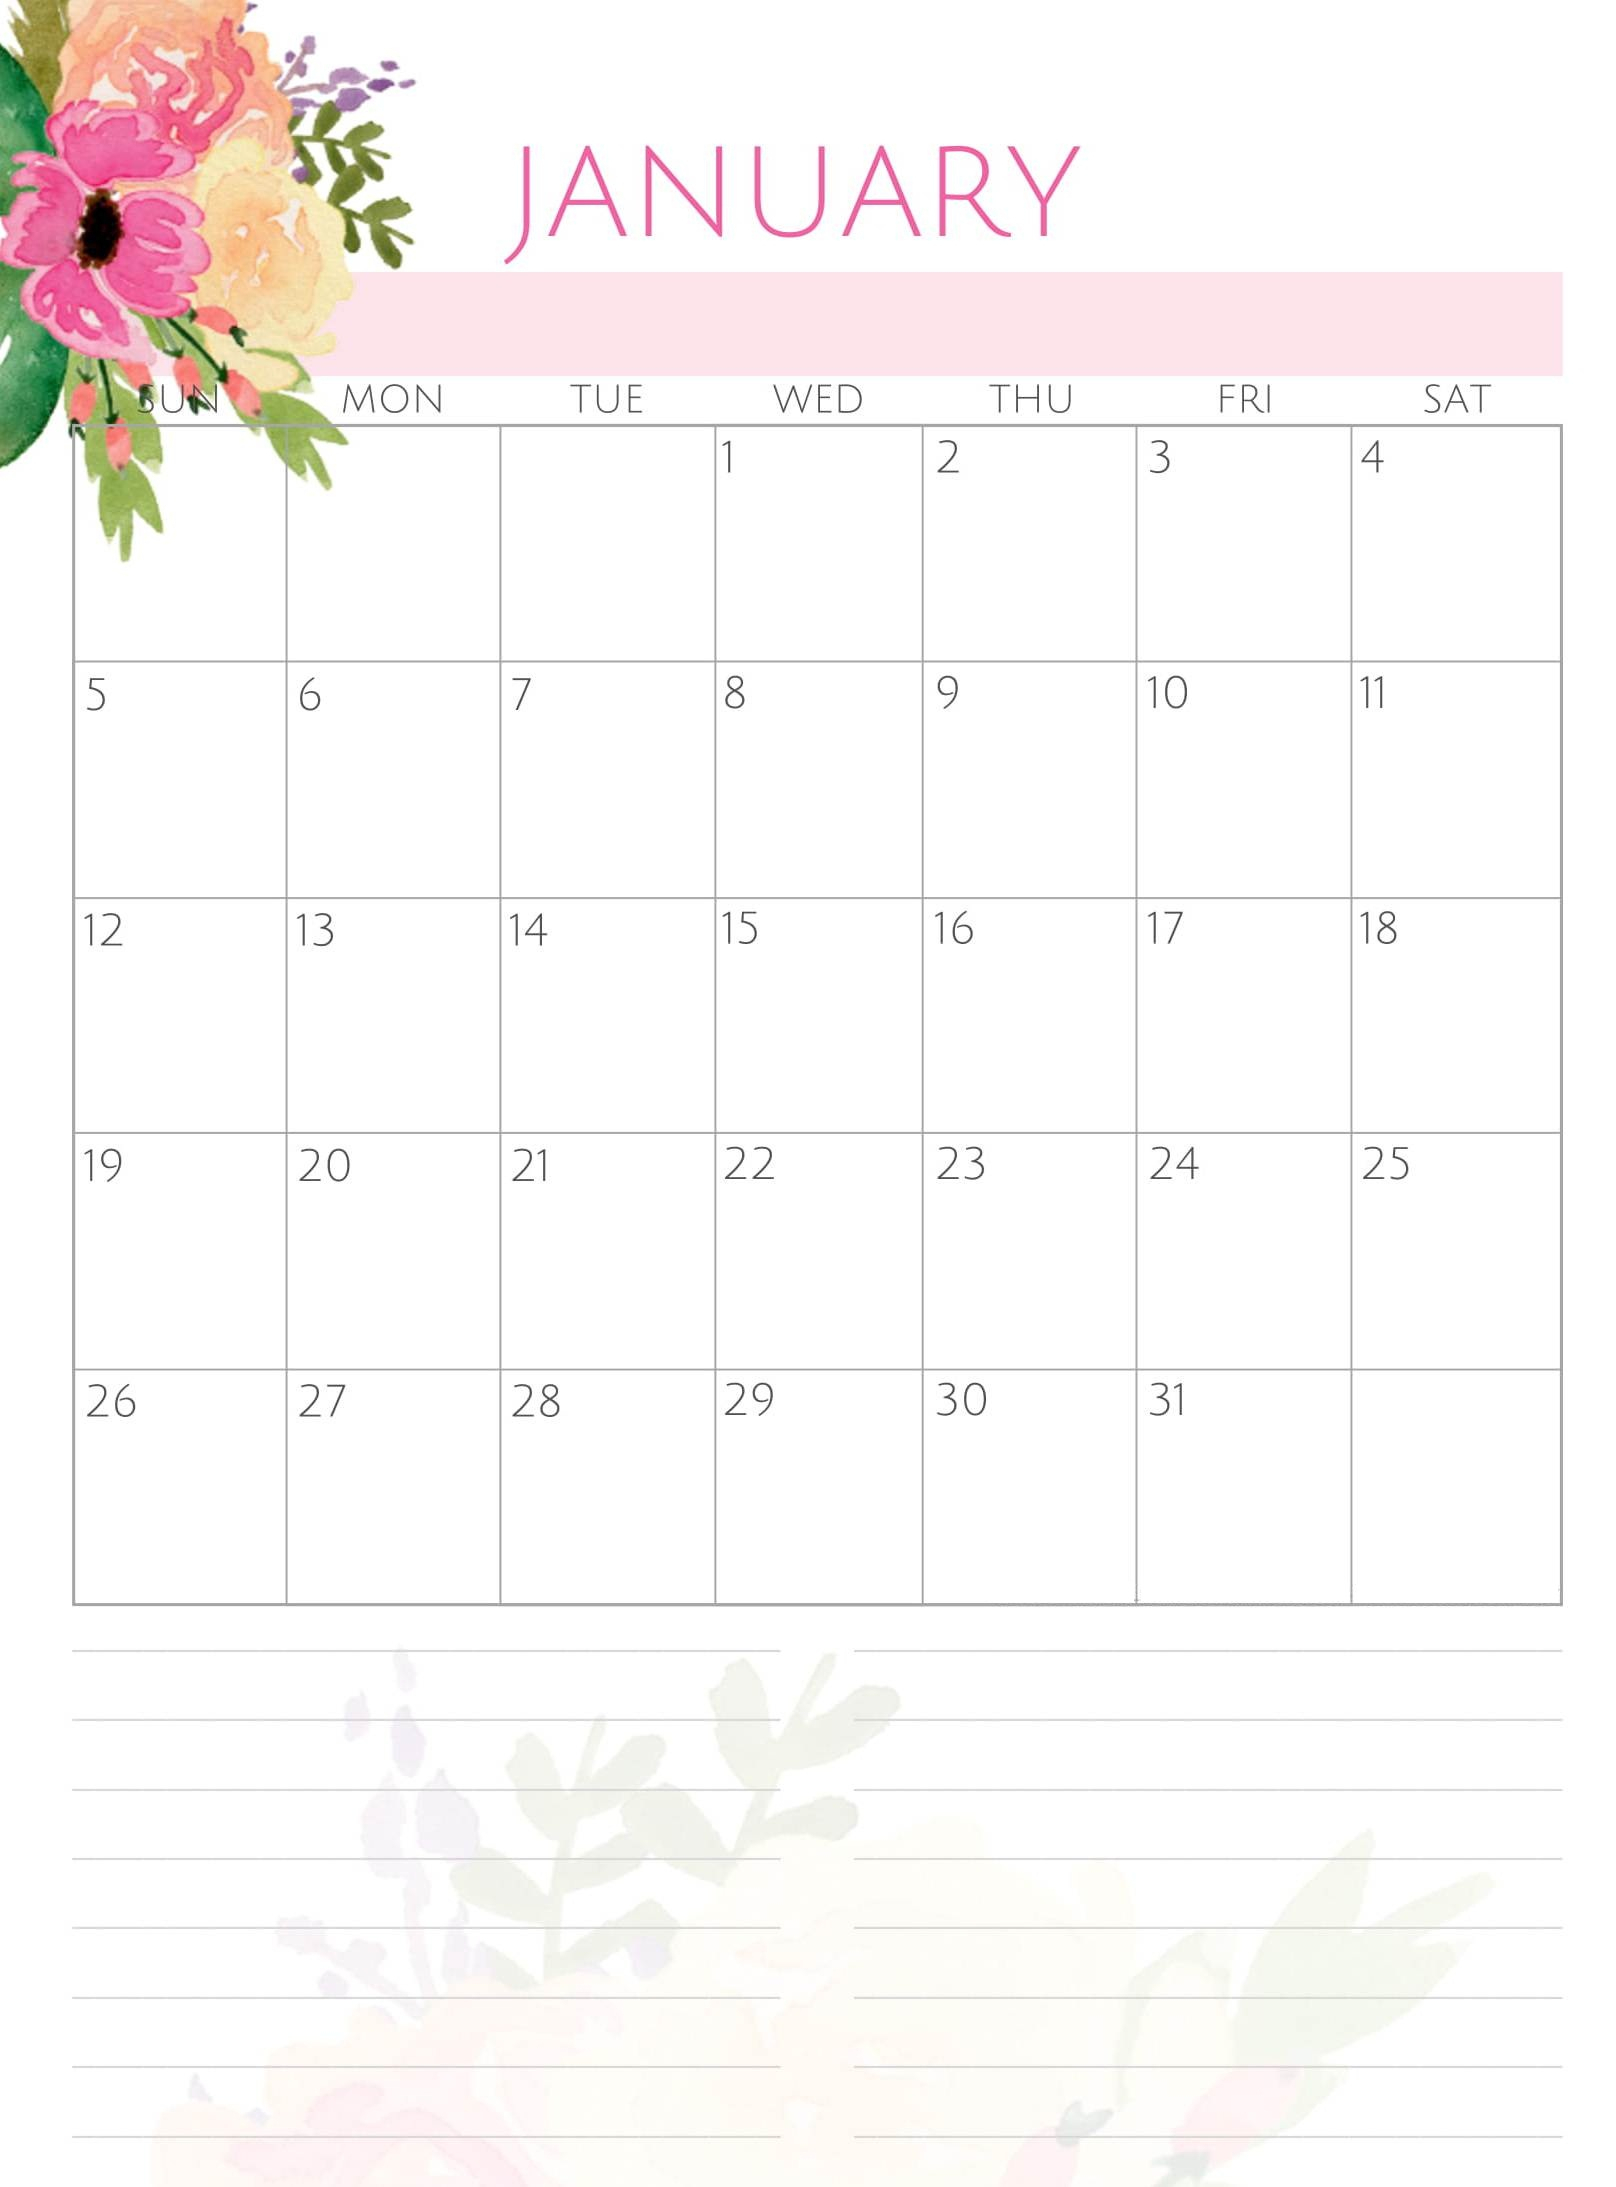 2020 Monthly Excel Calendar  210+ 2020 Calendar Vectors with regard to Calendar 2020 Excel Hong Kong